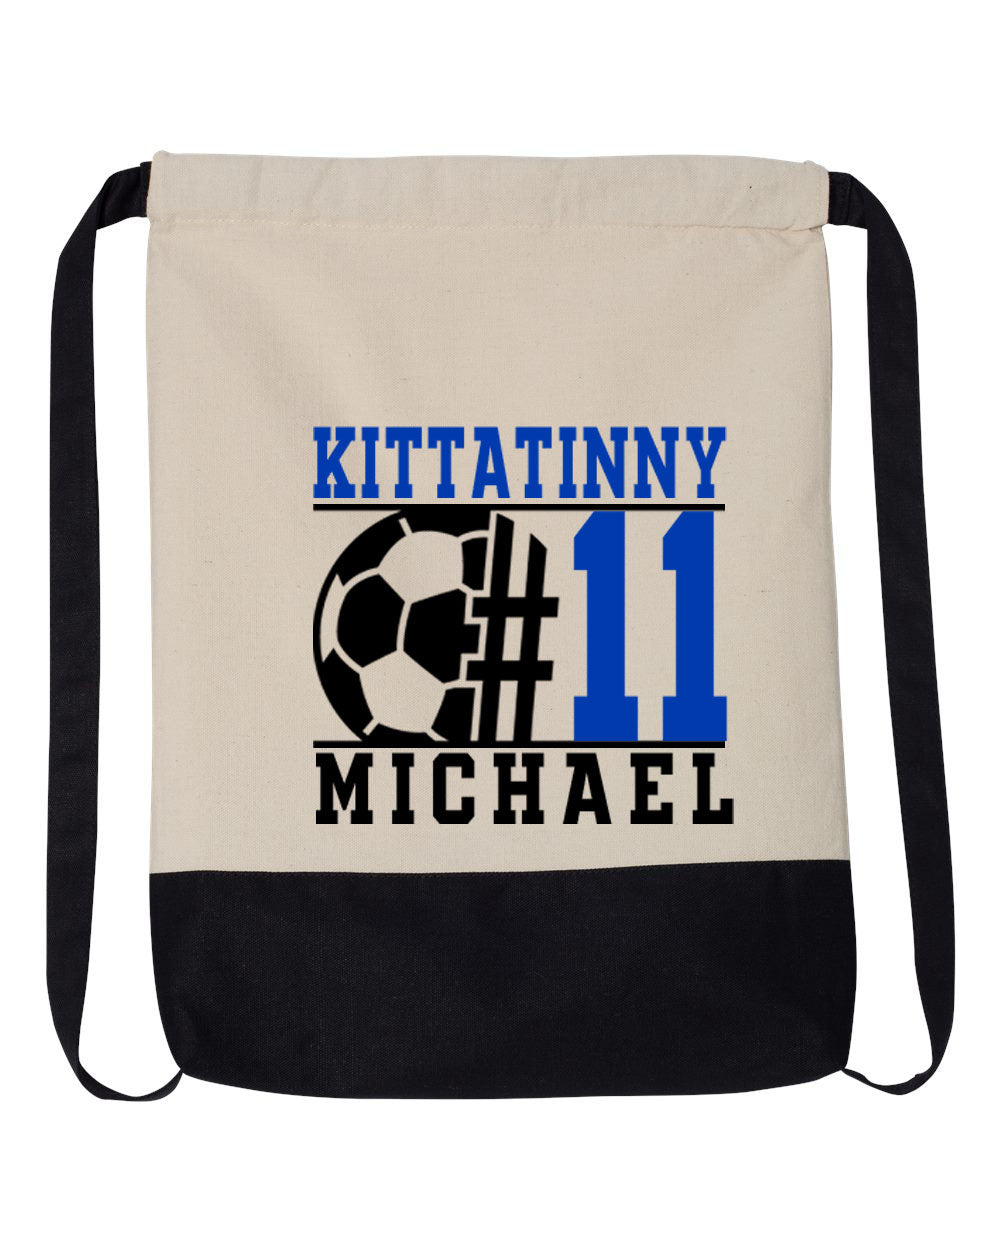 Kittatinny Soccer Design 5 Drawstring Bag